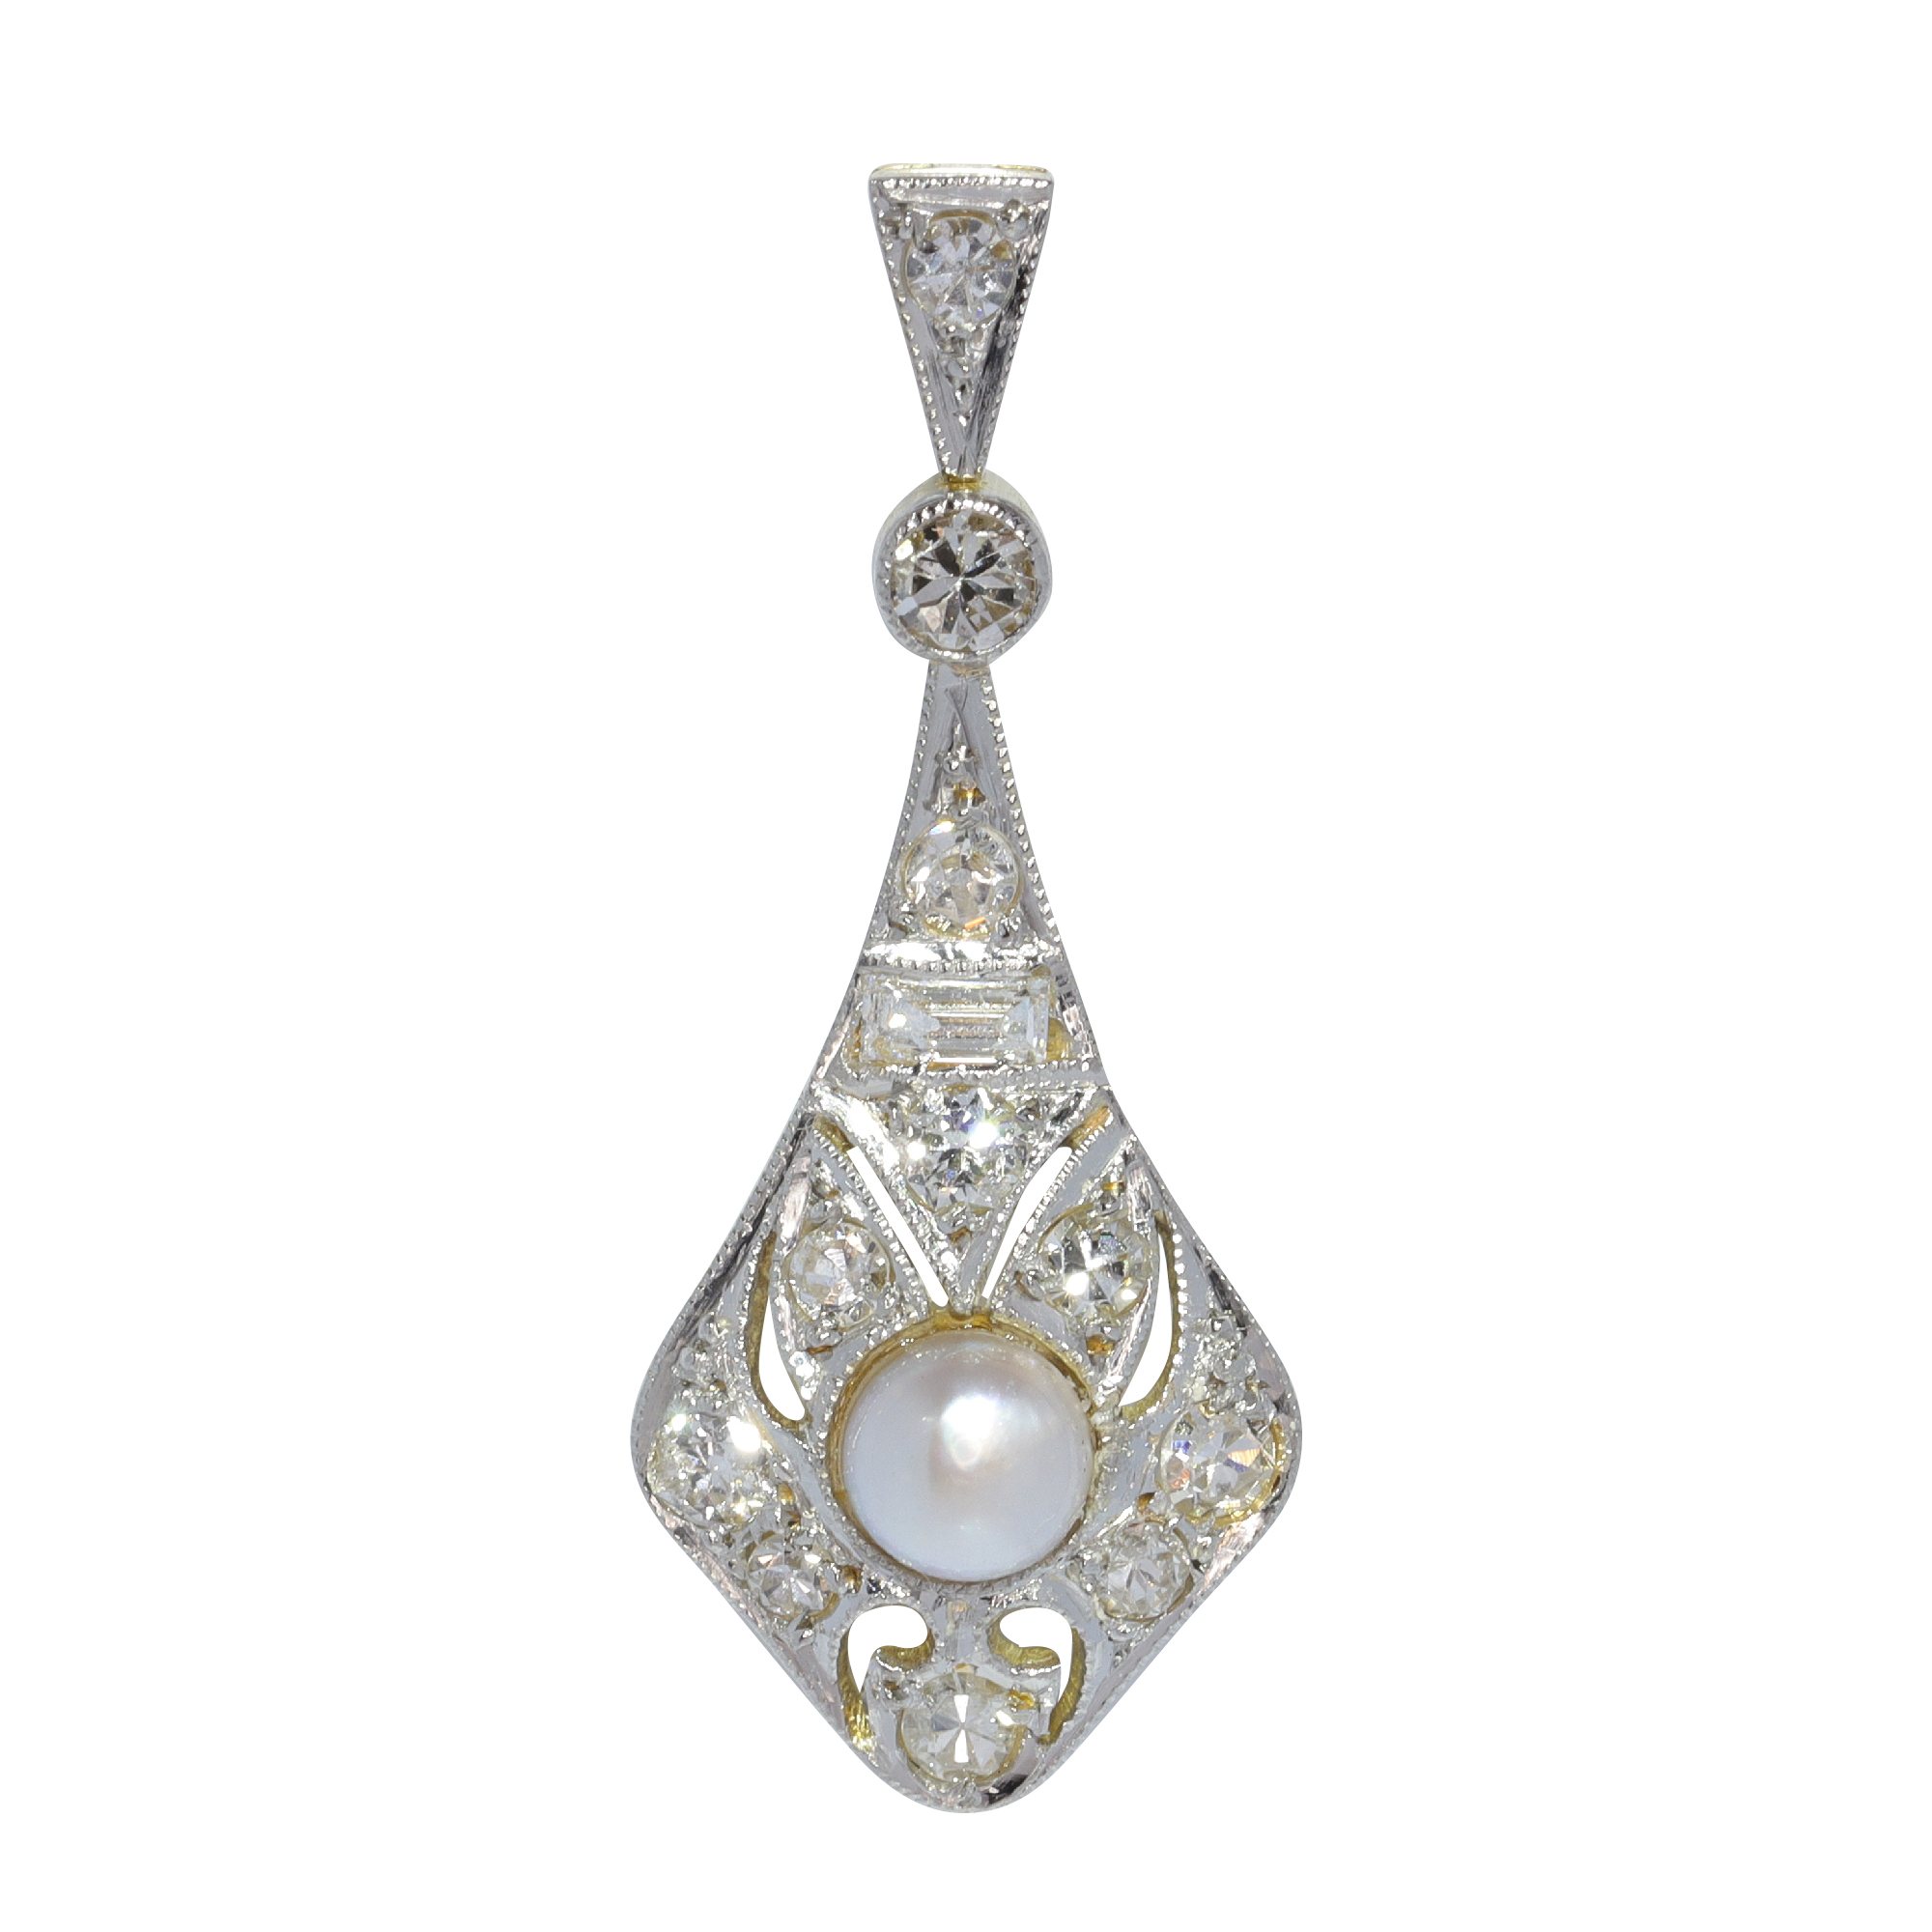 Vintage 1920's Art Deco diamond and pearl pendant